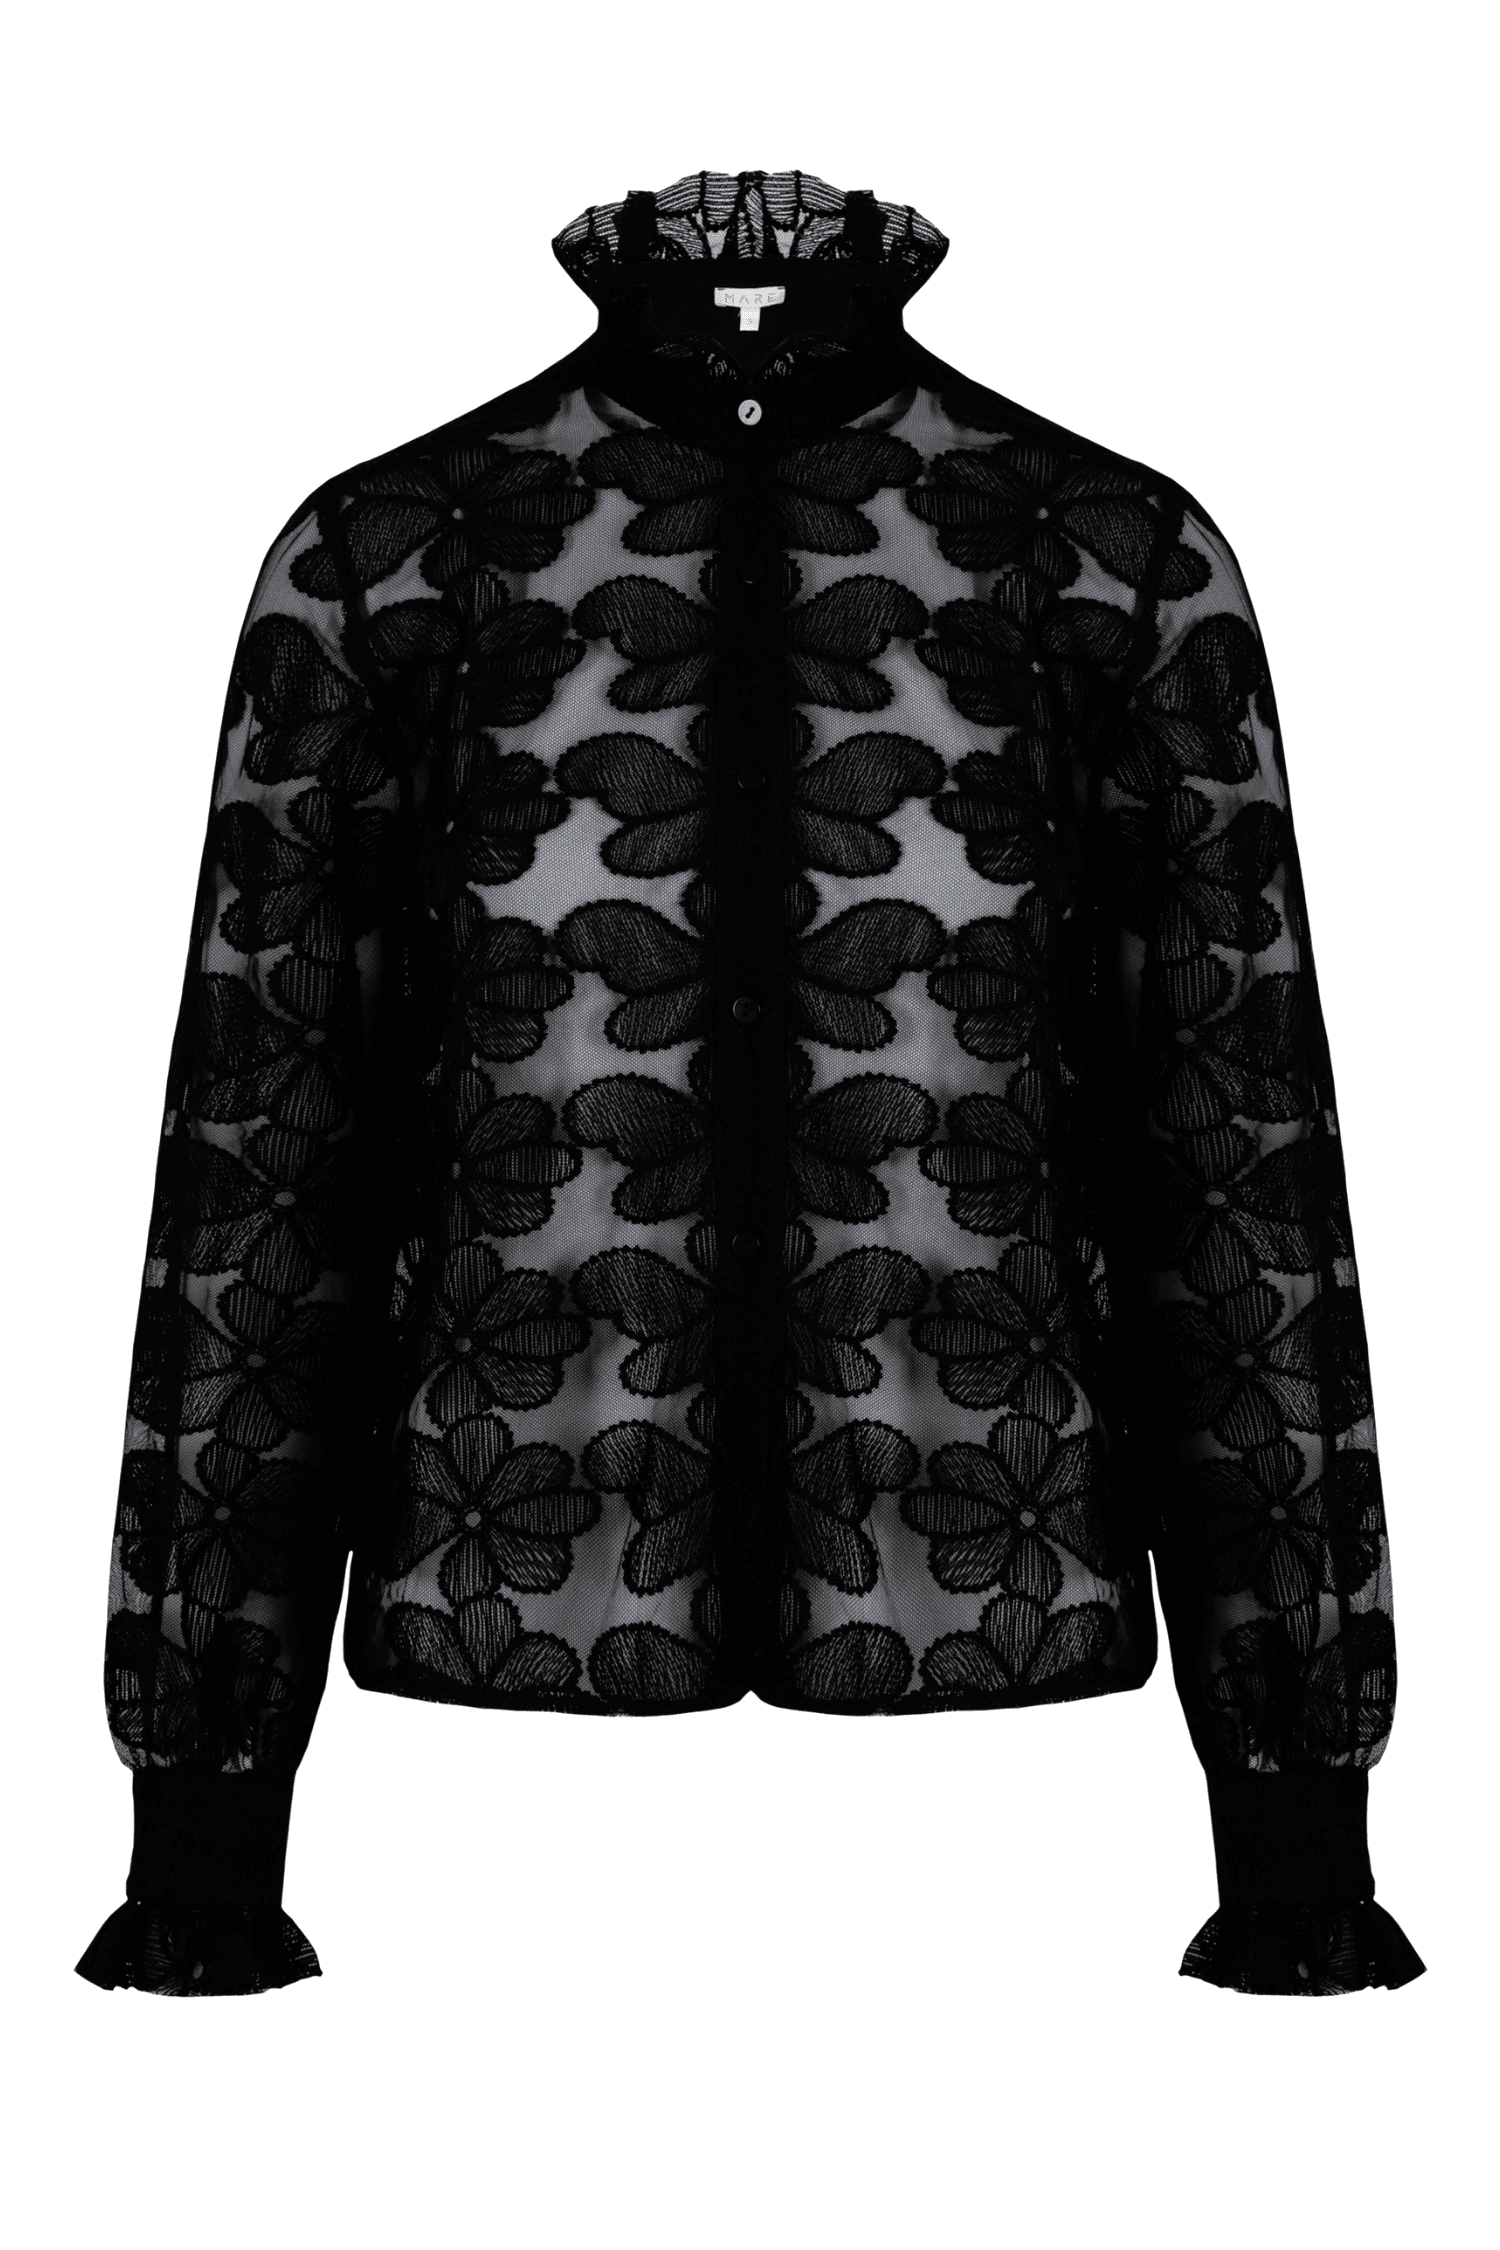 Queen Neck Transparent Flower Pattern Black Embroidery Shirt